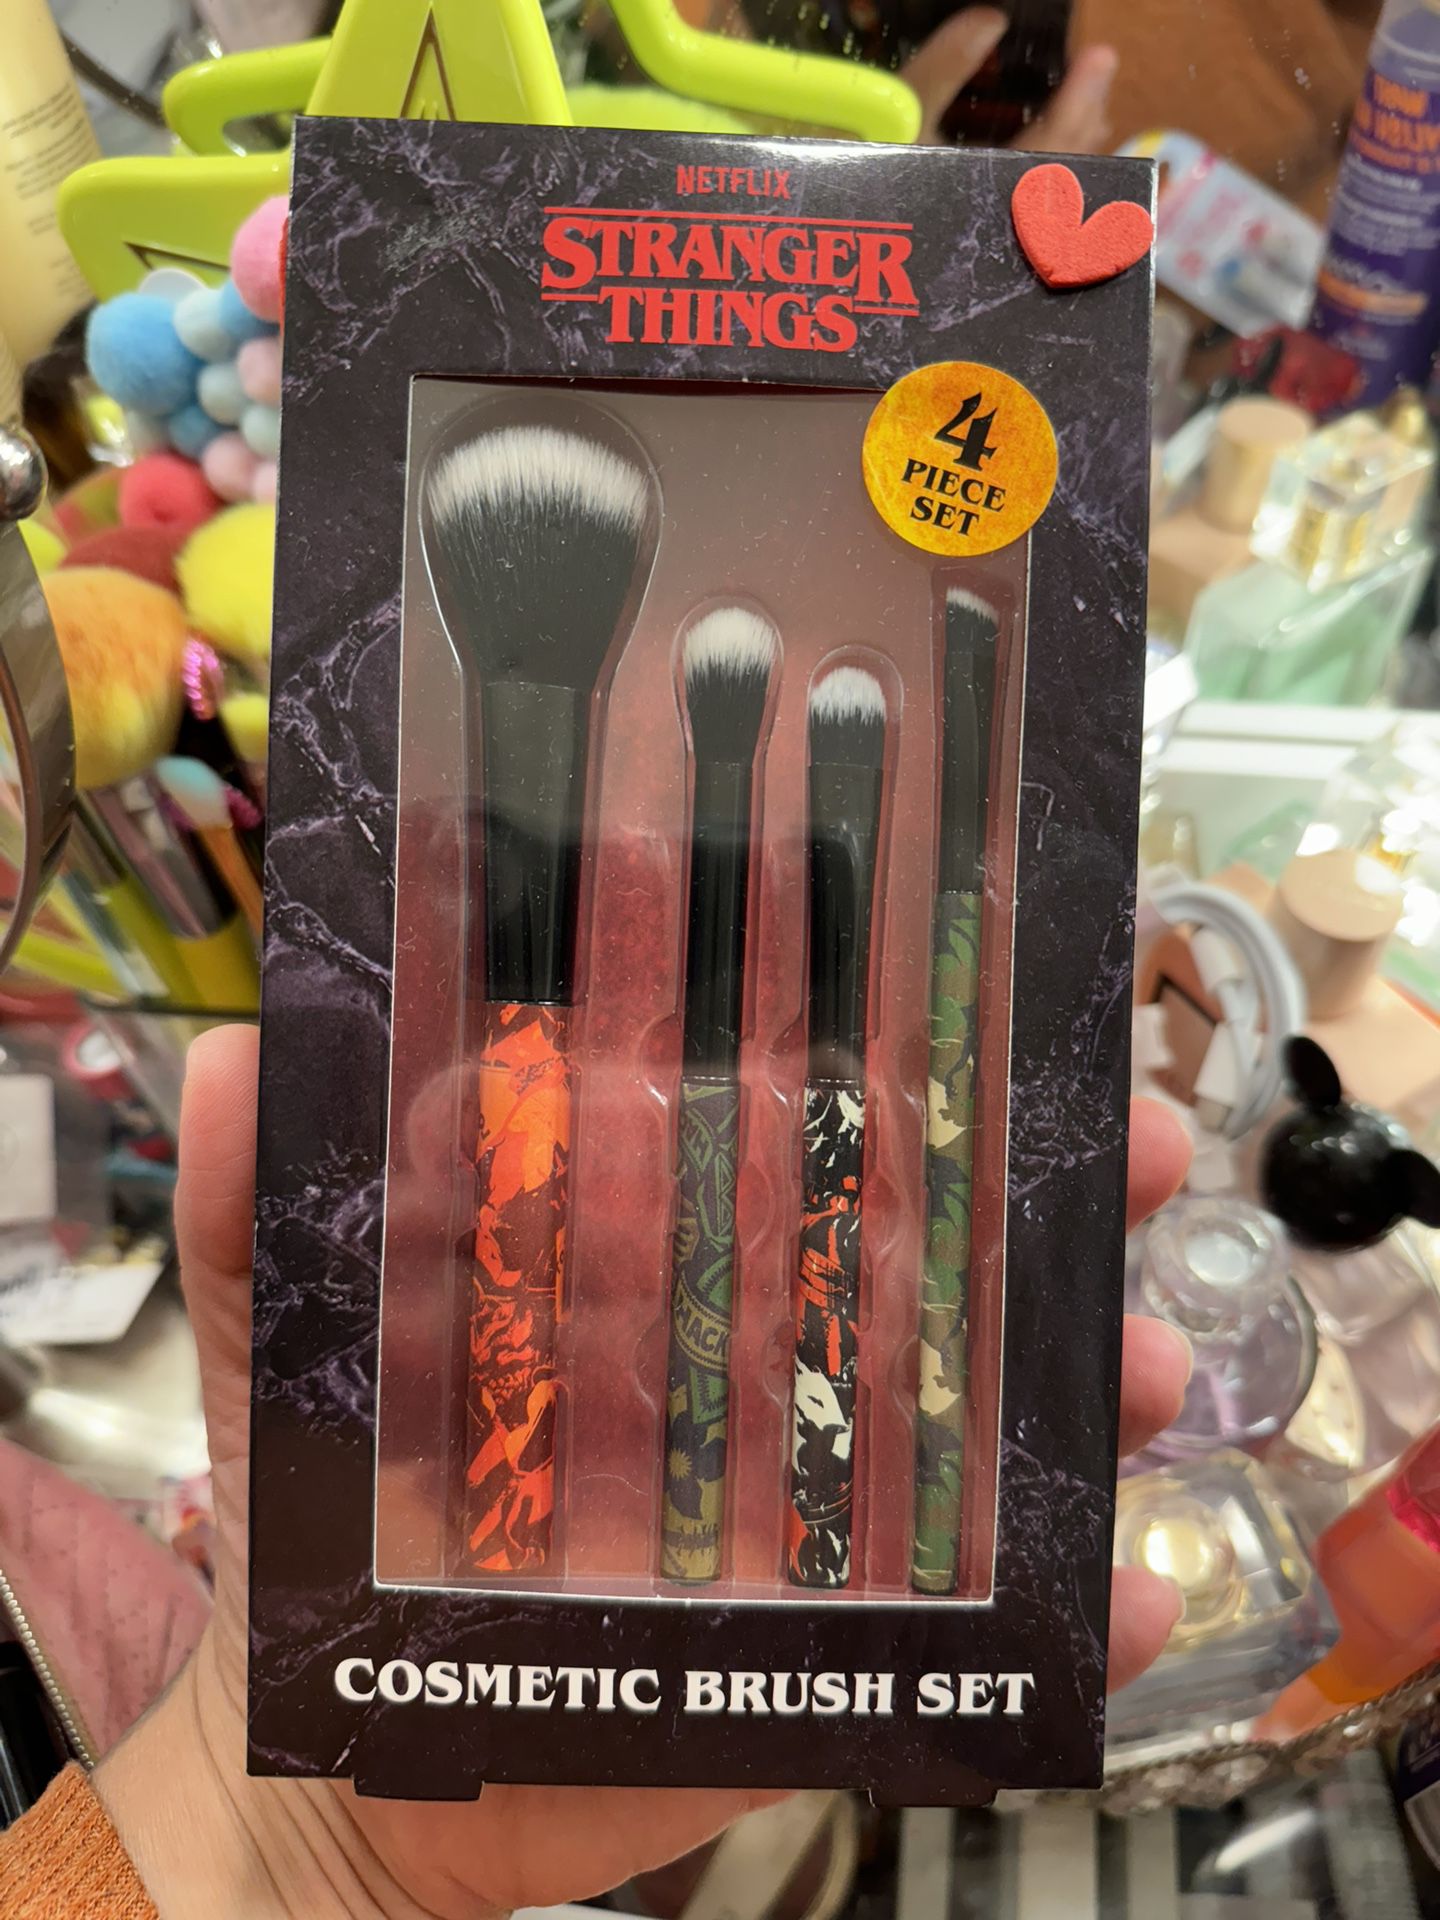 Stranger Things 4 Piece Set Cosmetic Brush Set / Brand New 